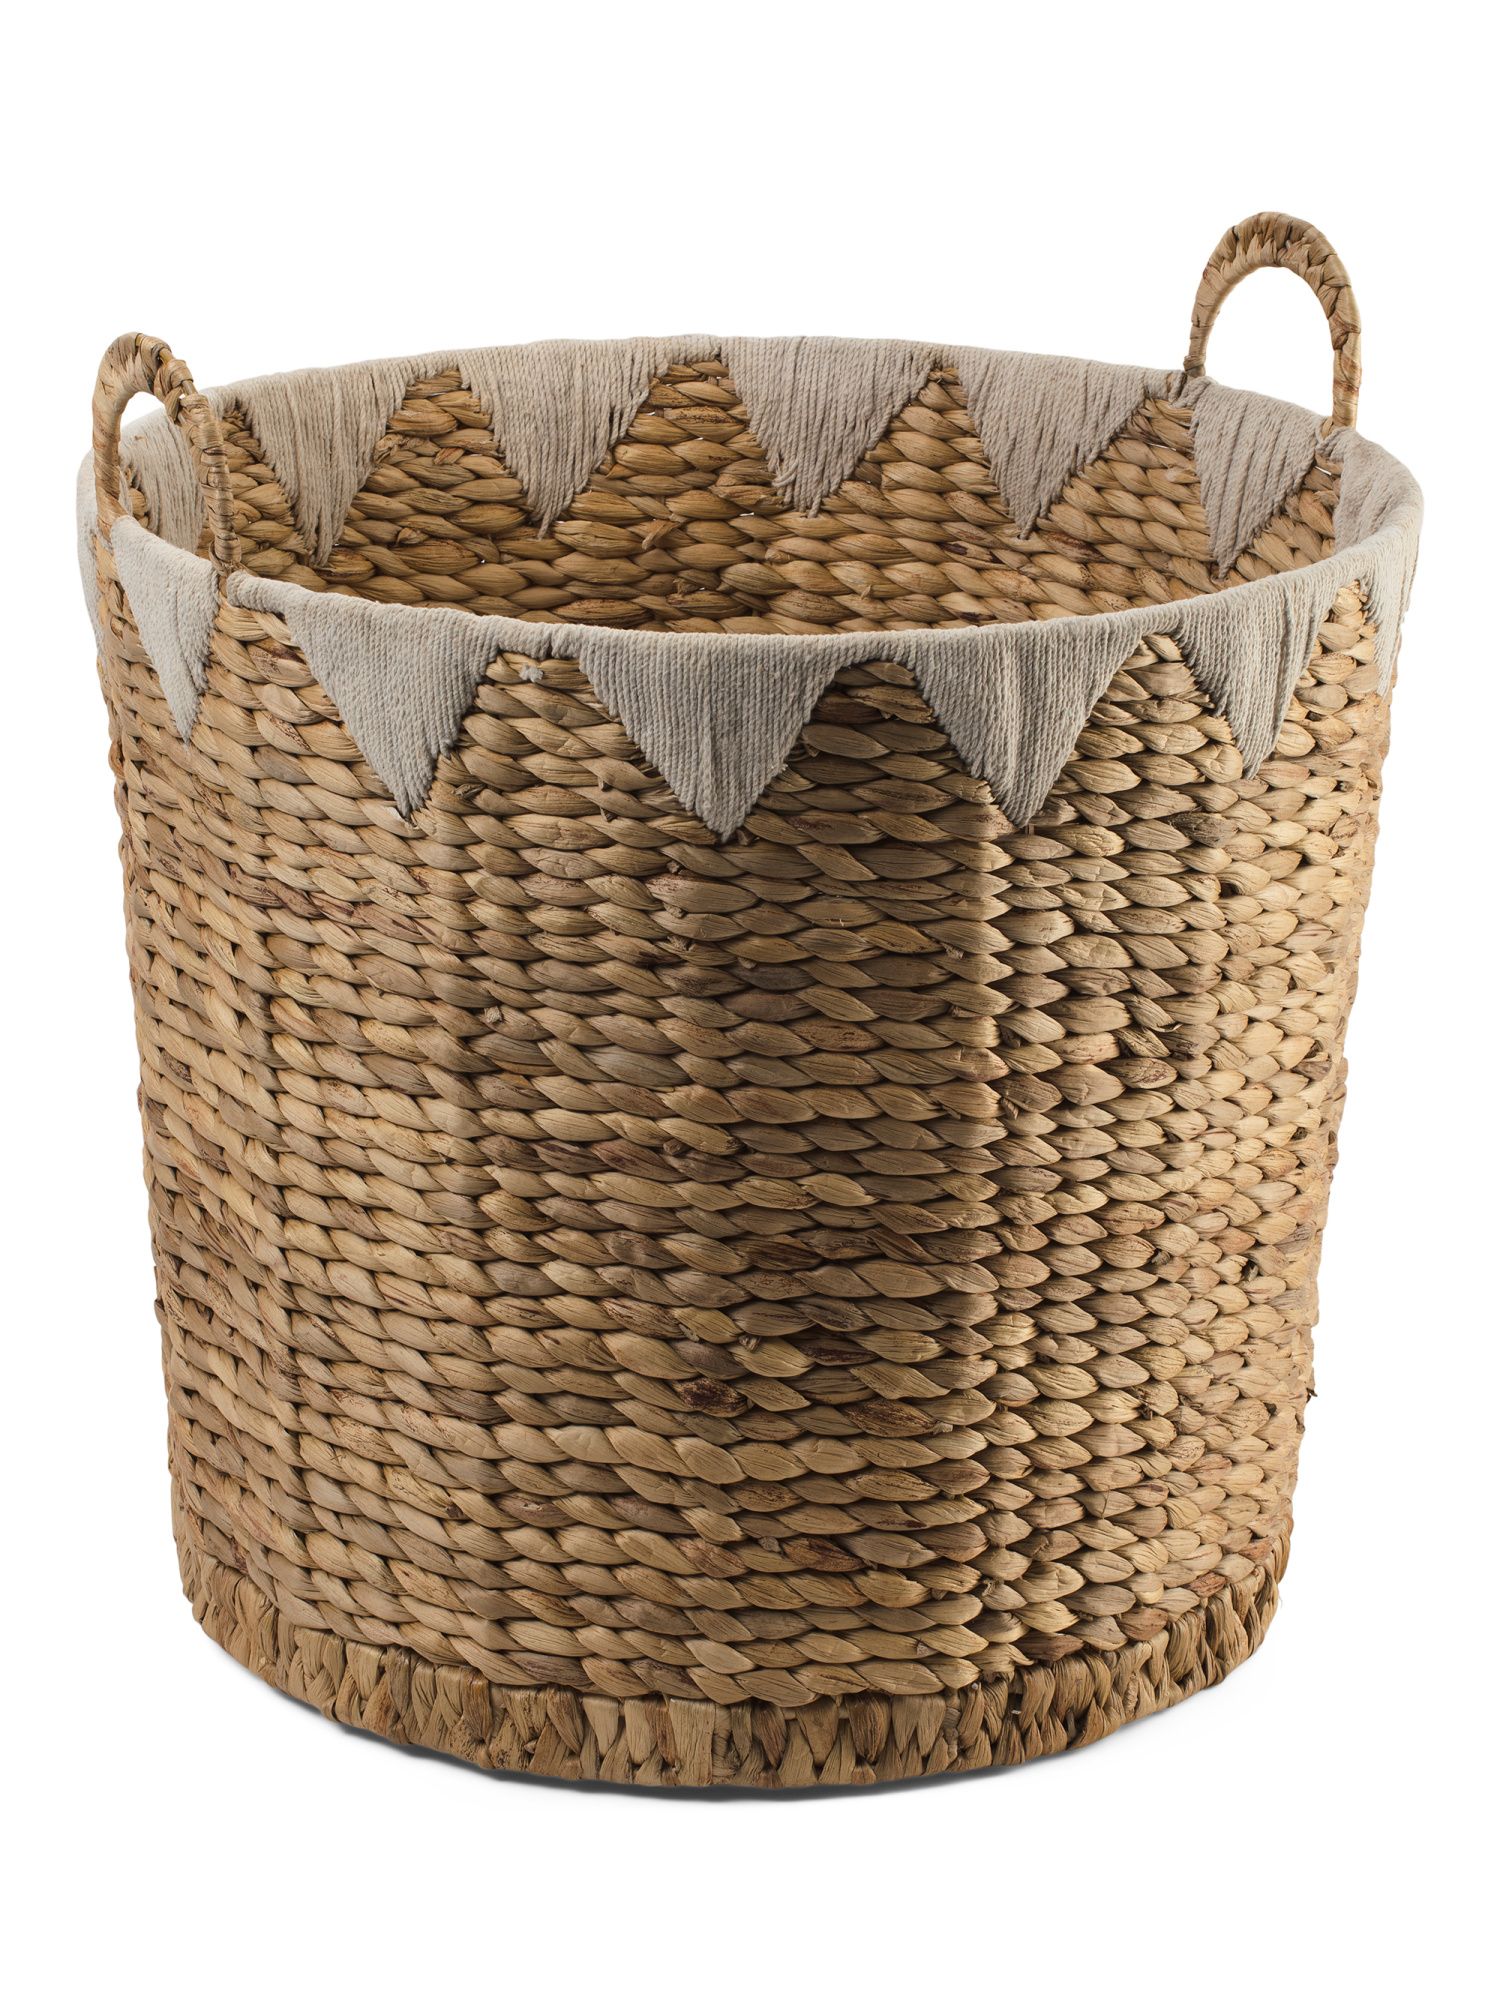 Large Ricenut Round Basket With Yarn Top Detail | TJ Maxx